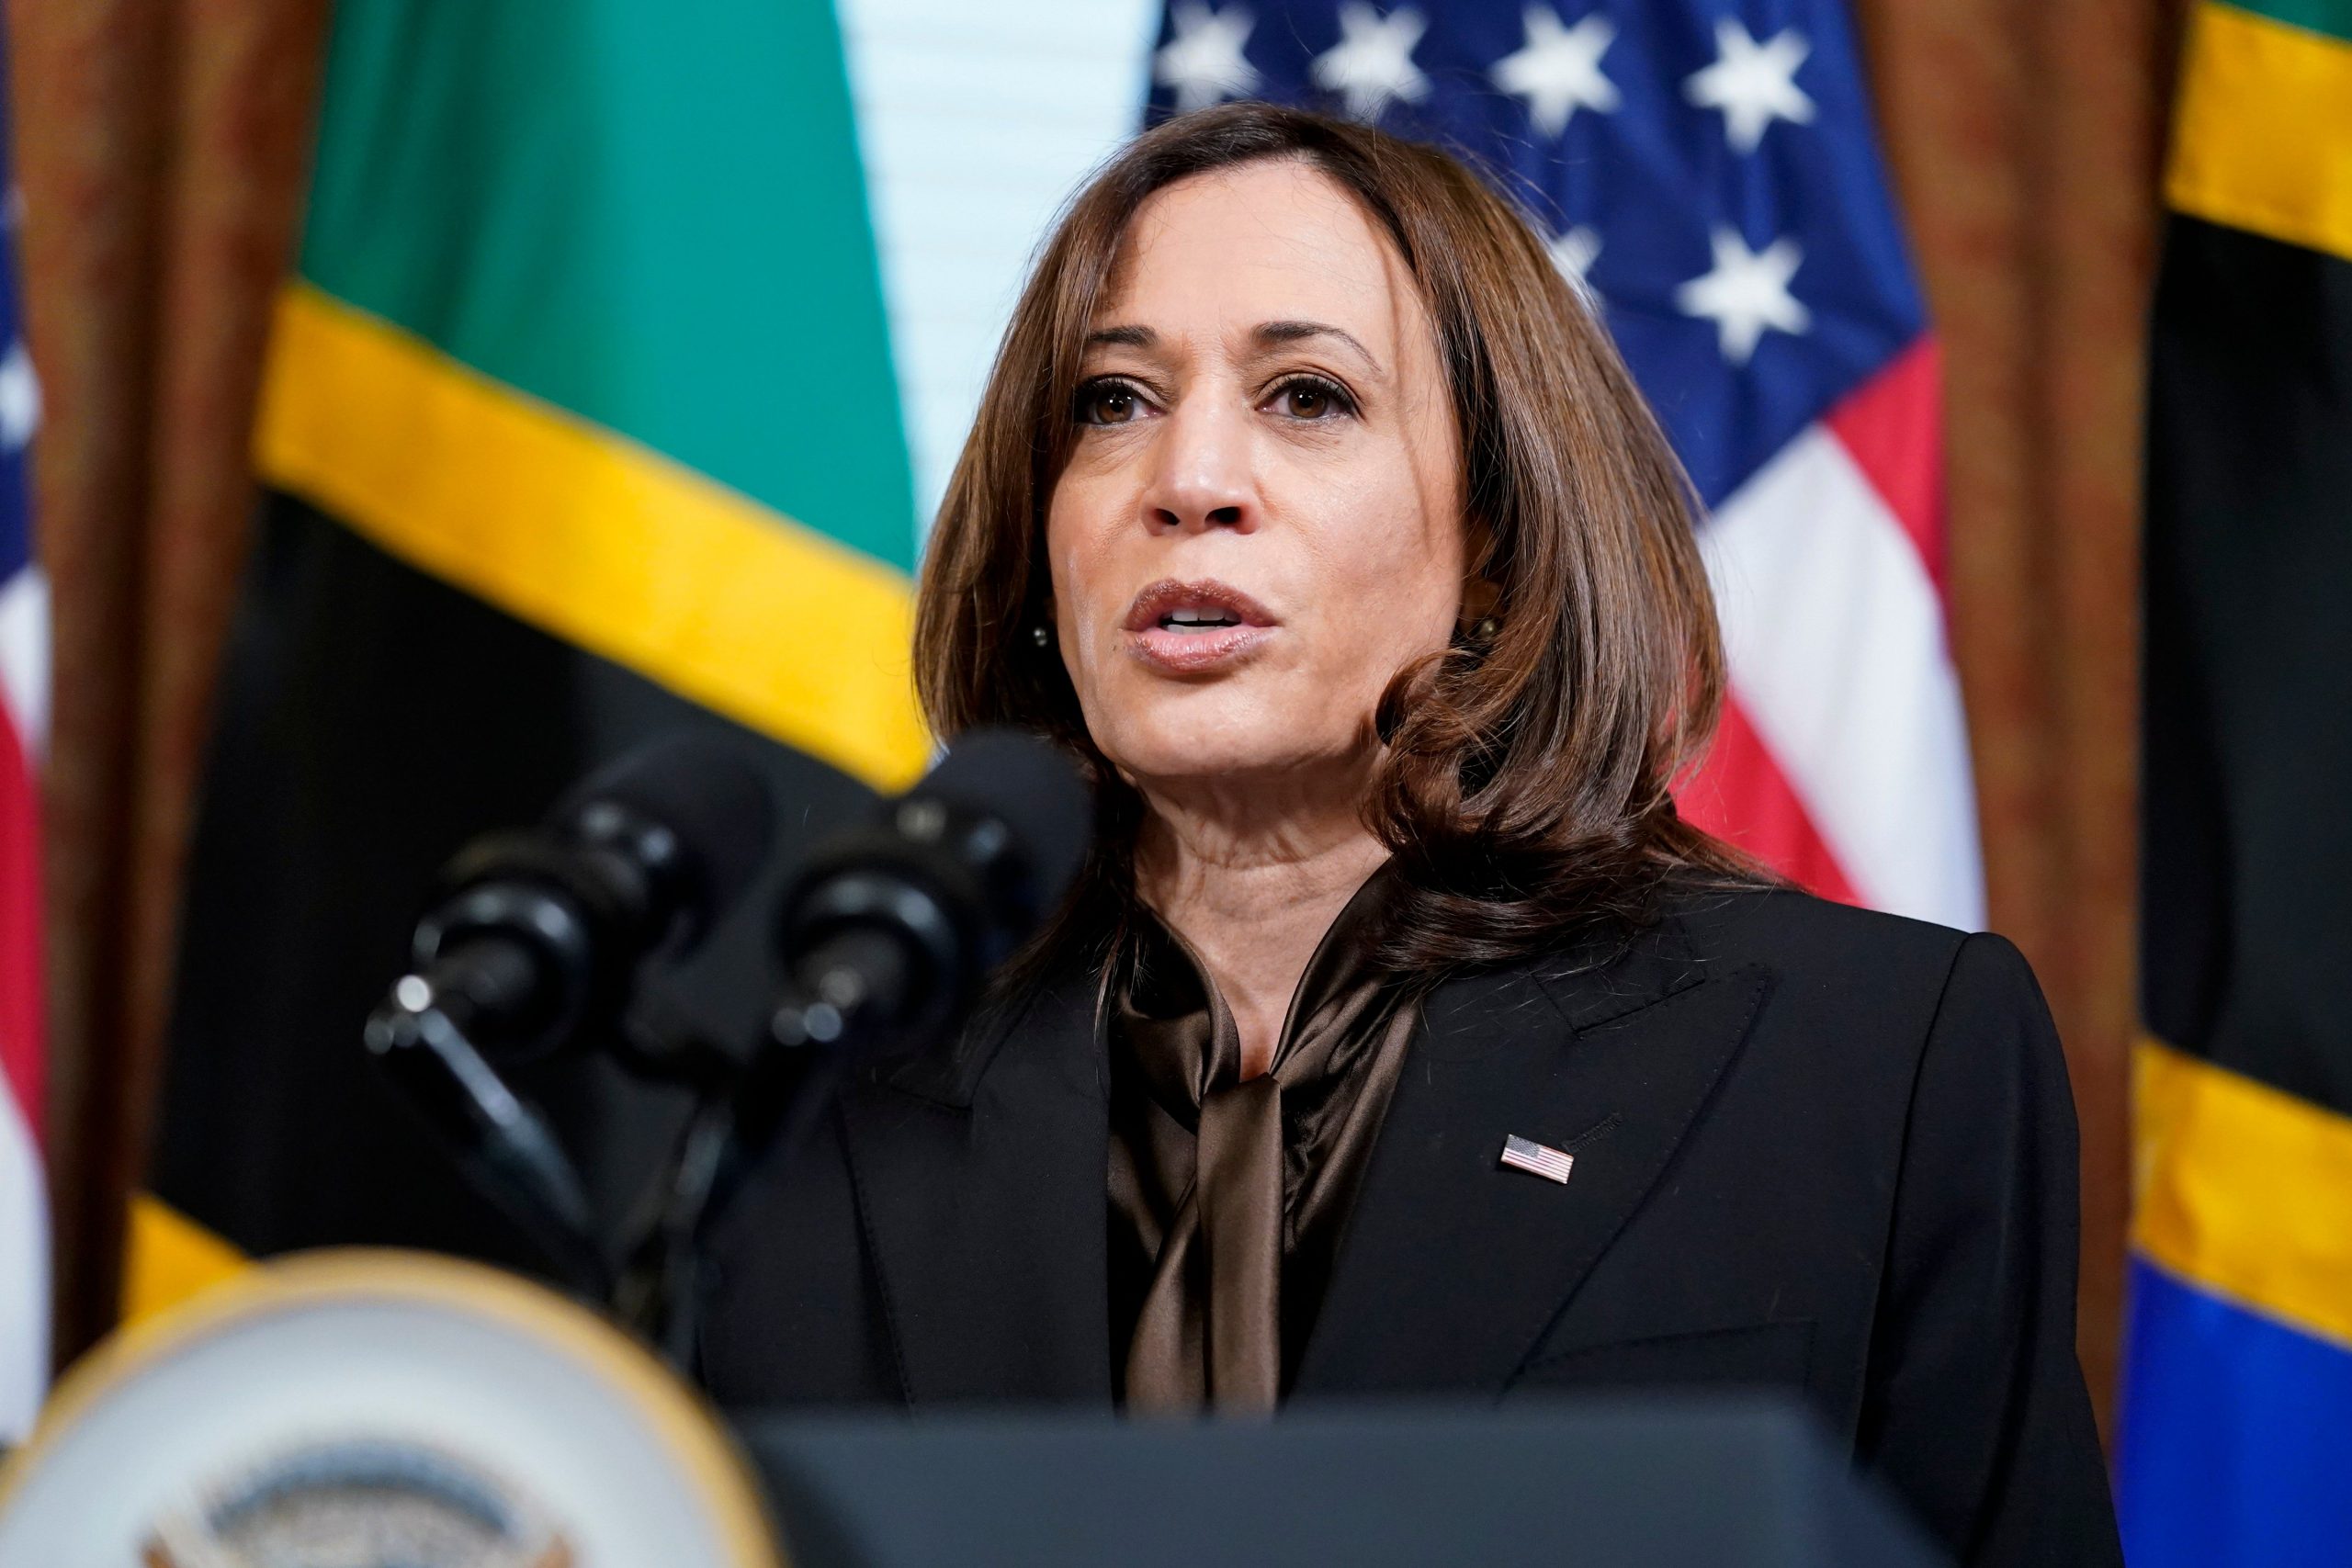 Roe v Wade: VP Kamala Harris warns ‘rights of all Americans are at risk’